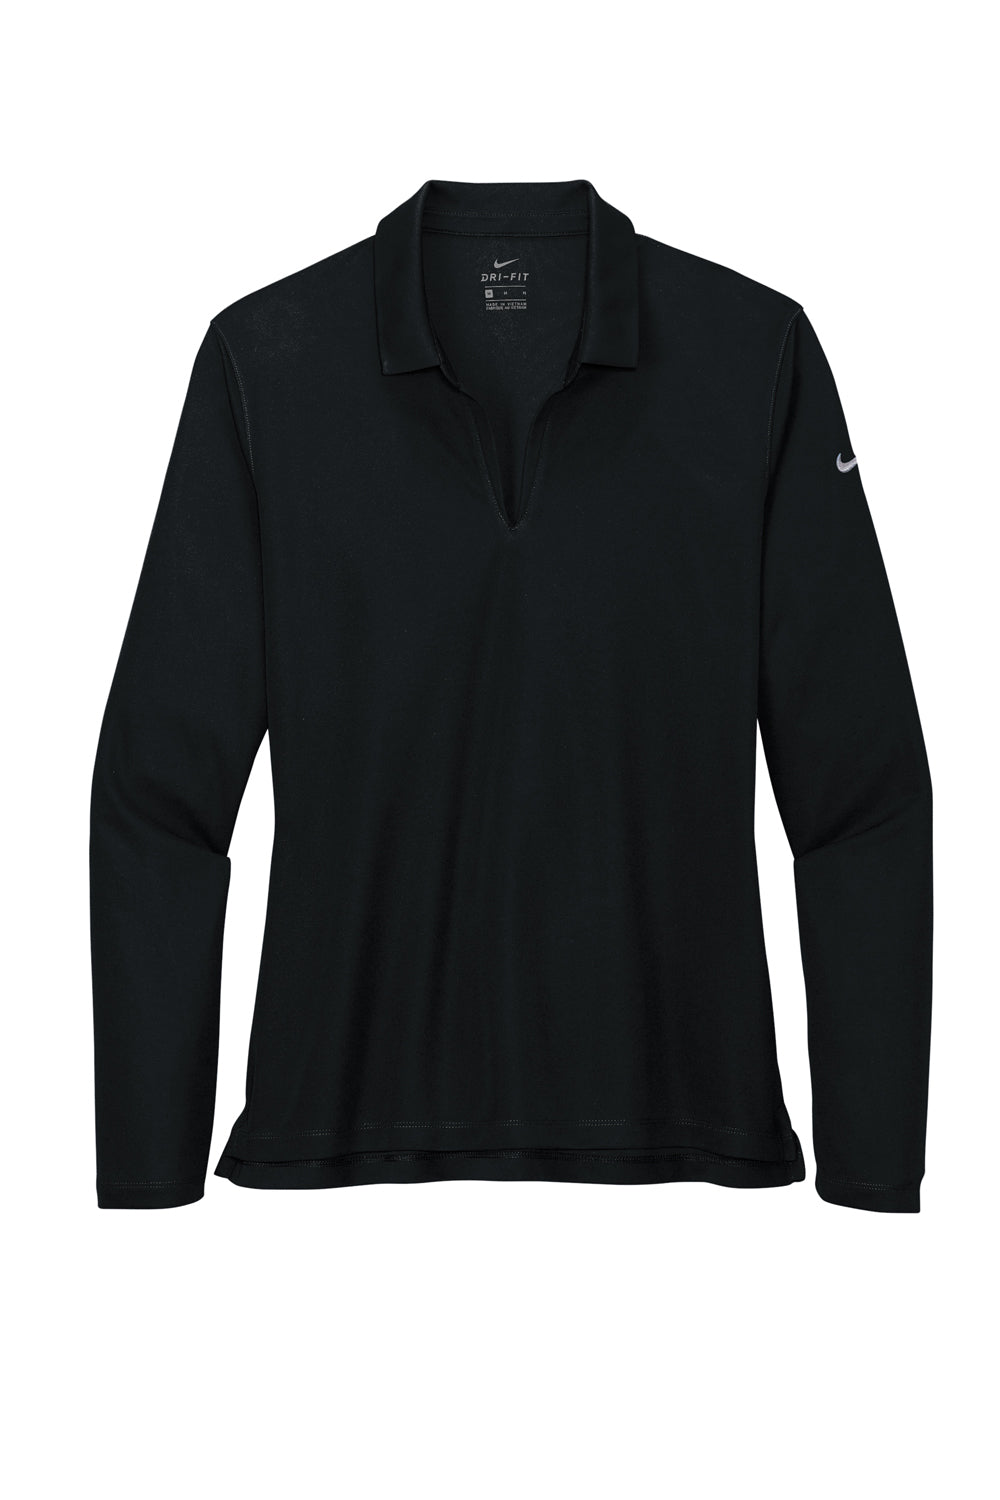 Nike NKDC2105 Womens Dri-Fit Moisture Wicking Micro Pique 2.0 Long Sleeve Polo Shirt Black Flat Front